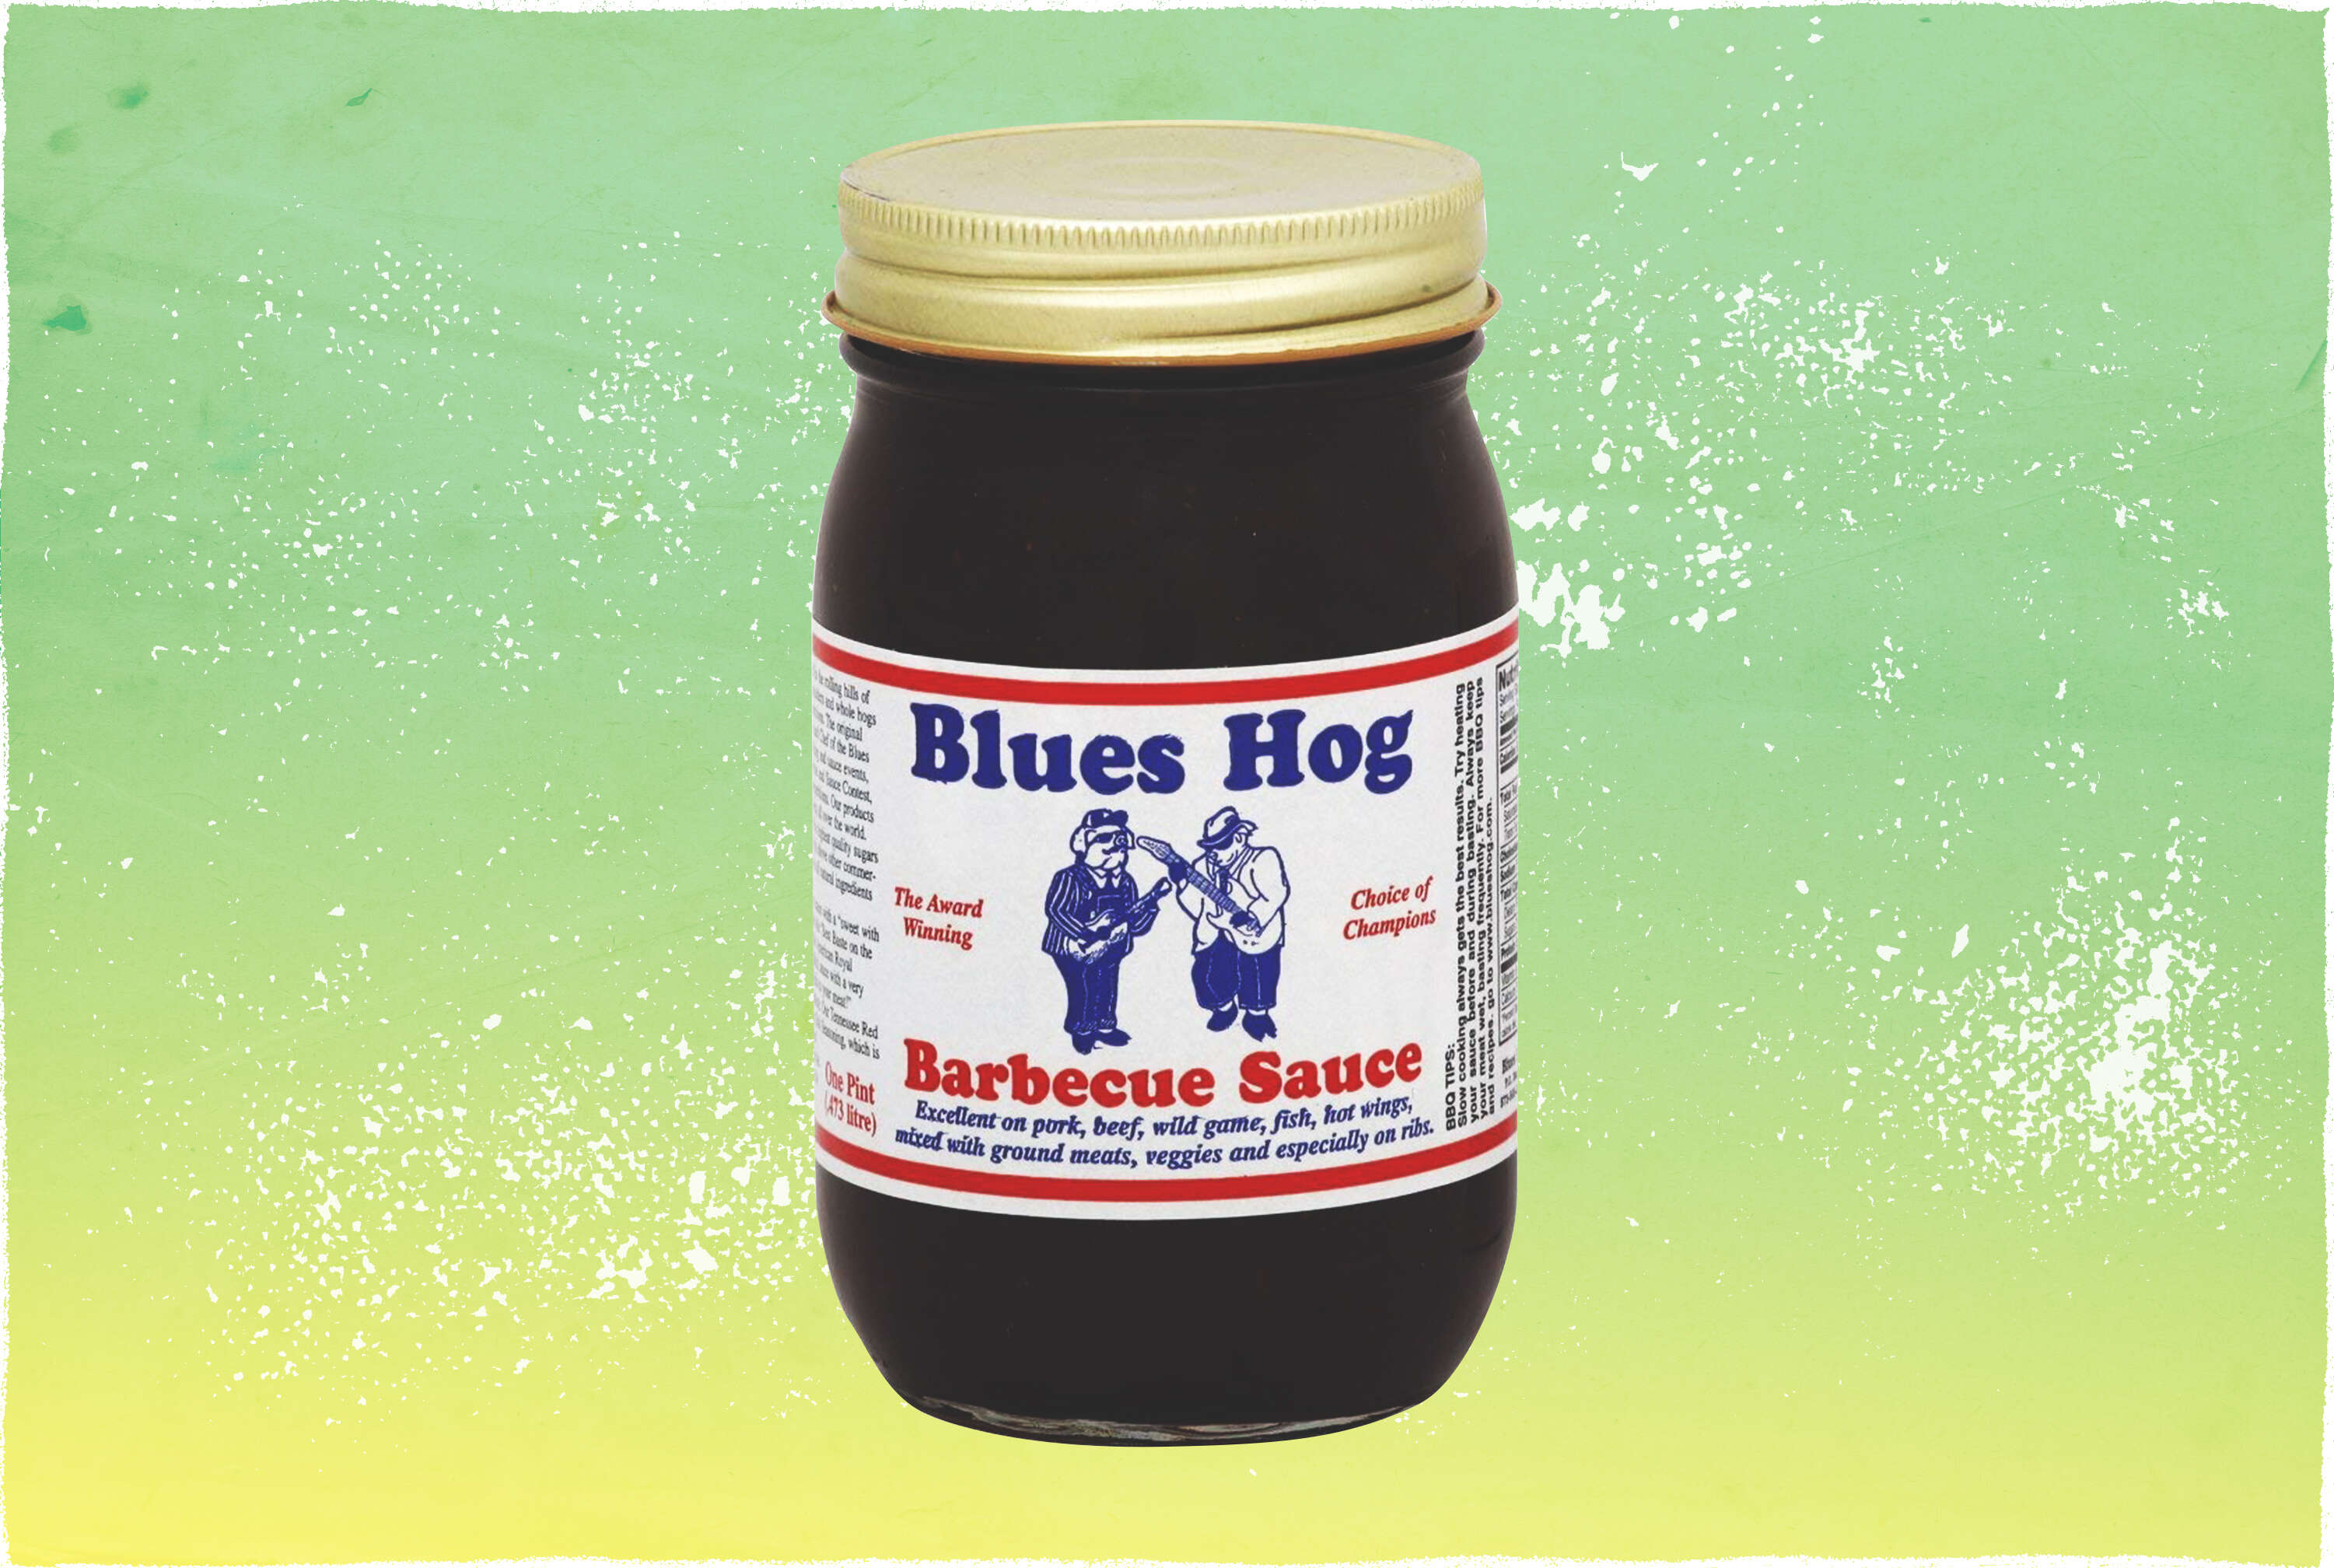 Blues Hog barbecue sauce